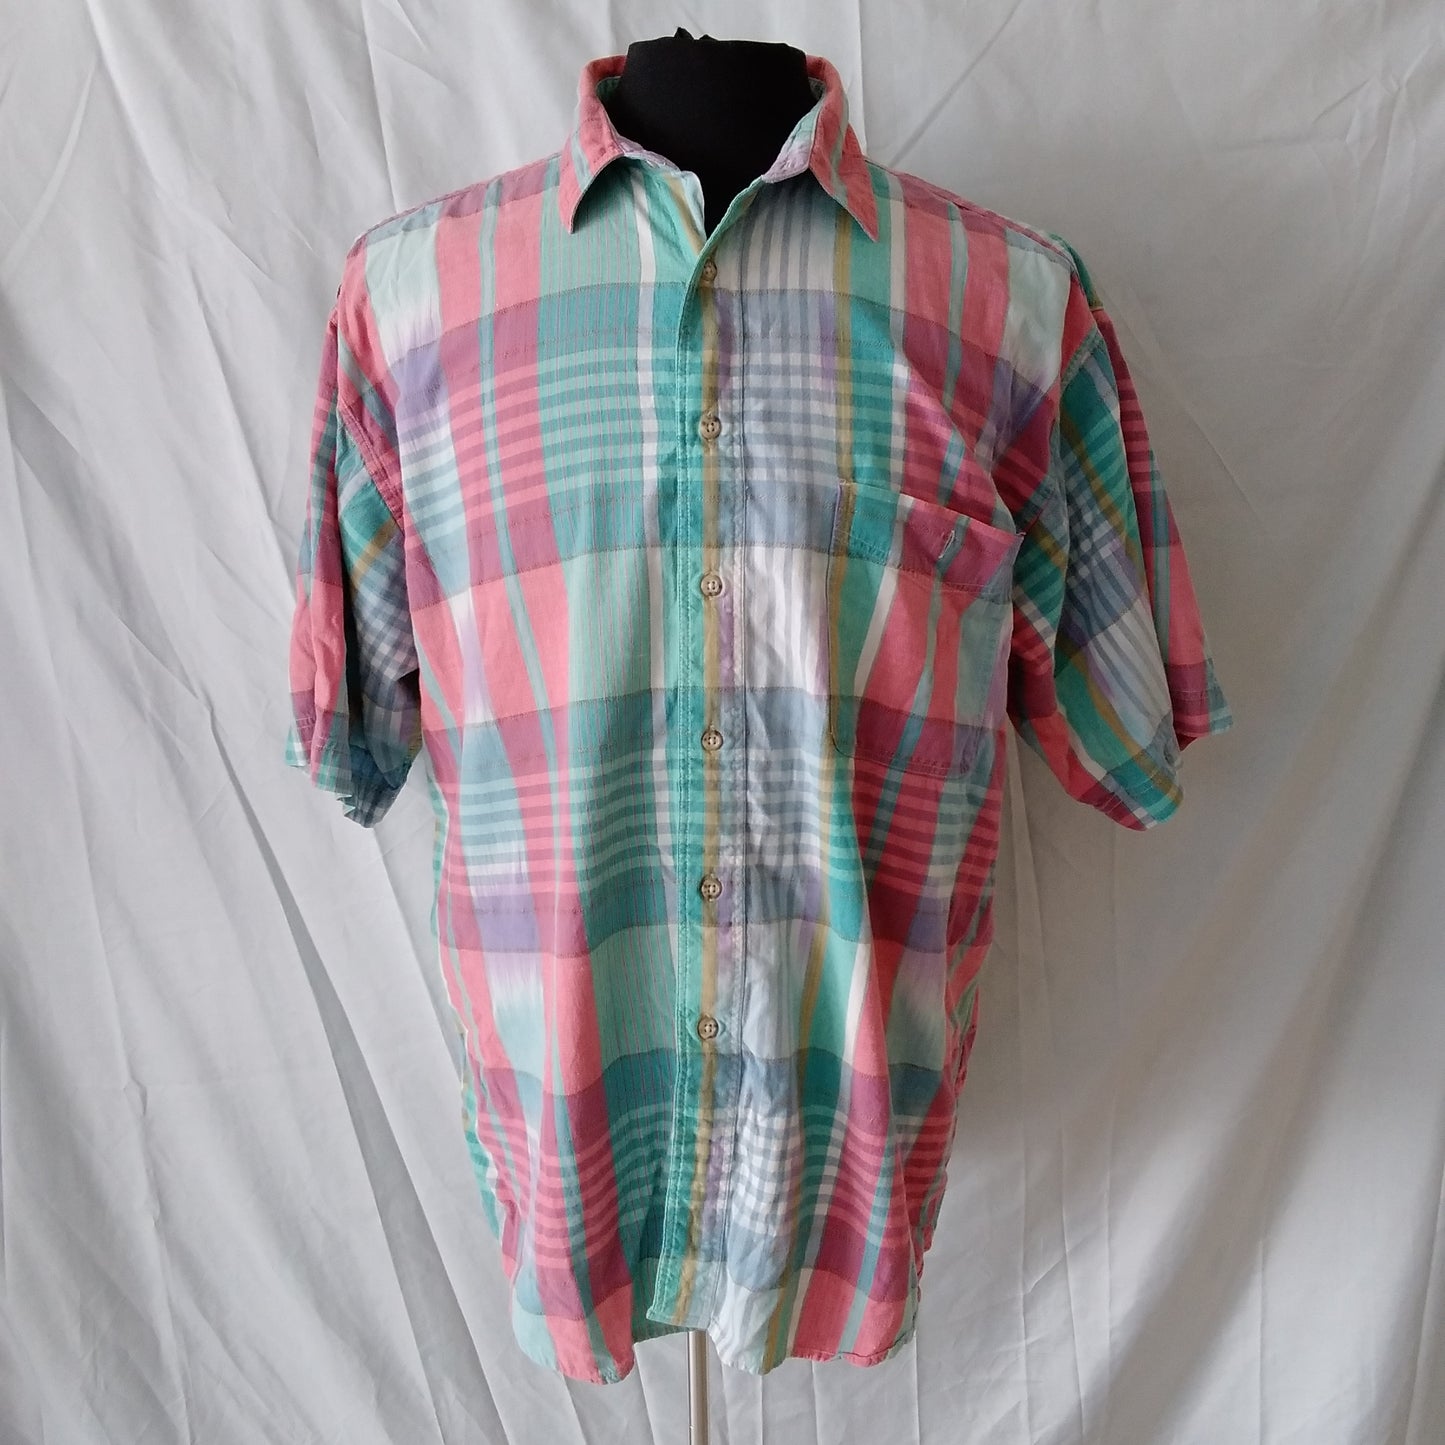 Eddie Bauer Multi-Colored Button Up Short Sleeve Shirt - XL